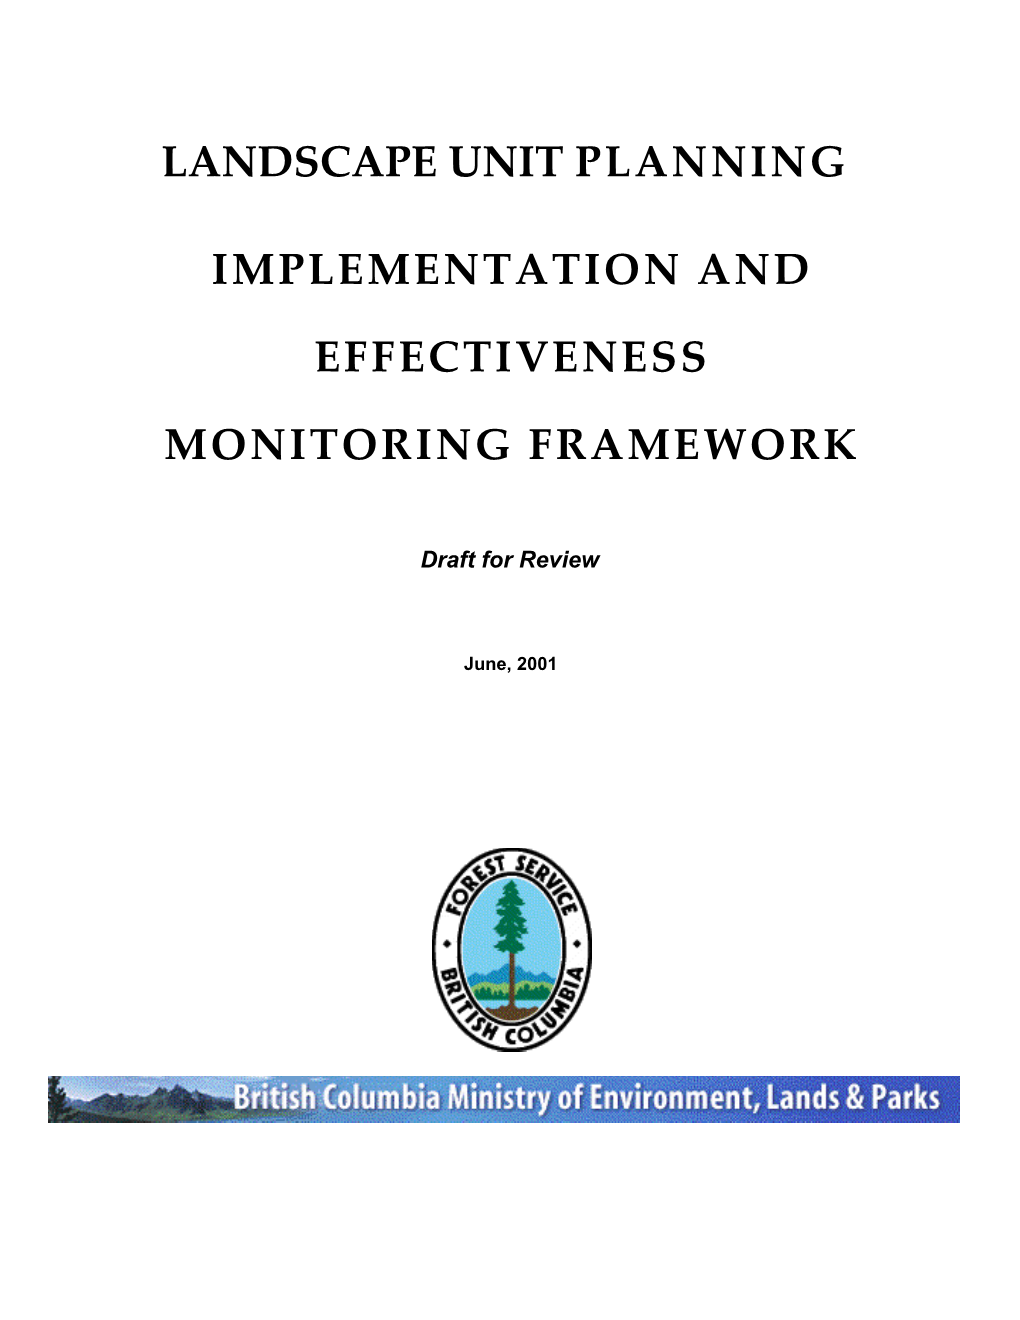 Implementation and Effectiveness Monitoring Framework